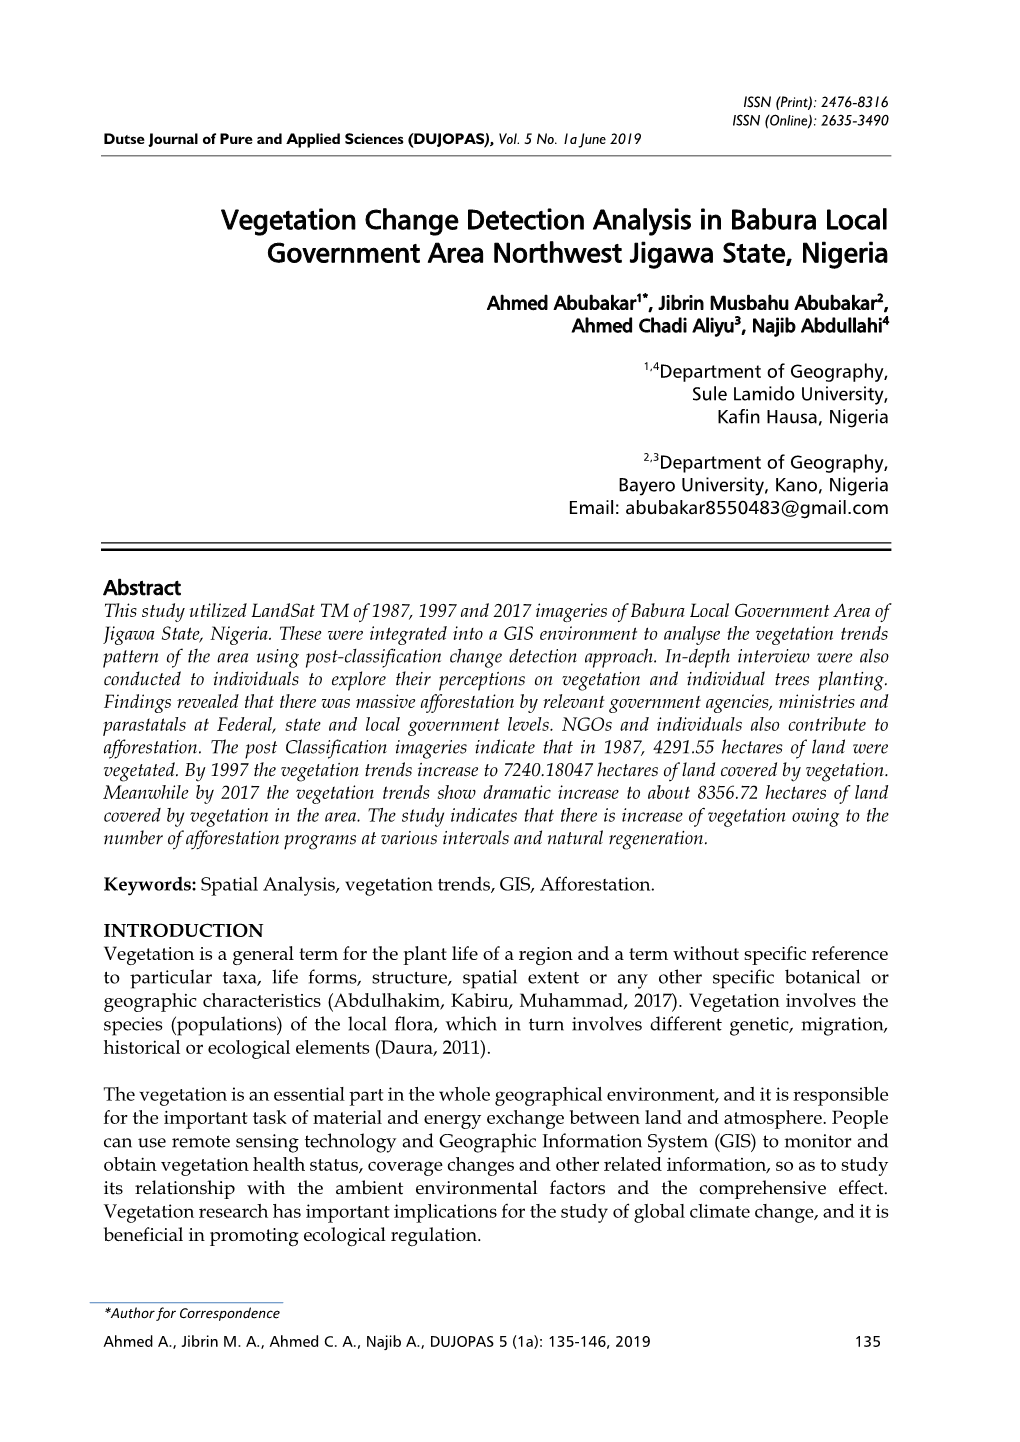 Vegetation Change Detection Analysis in Babura Local Government Area Northwest Jigawa State, Nigeria